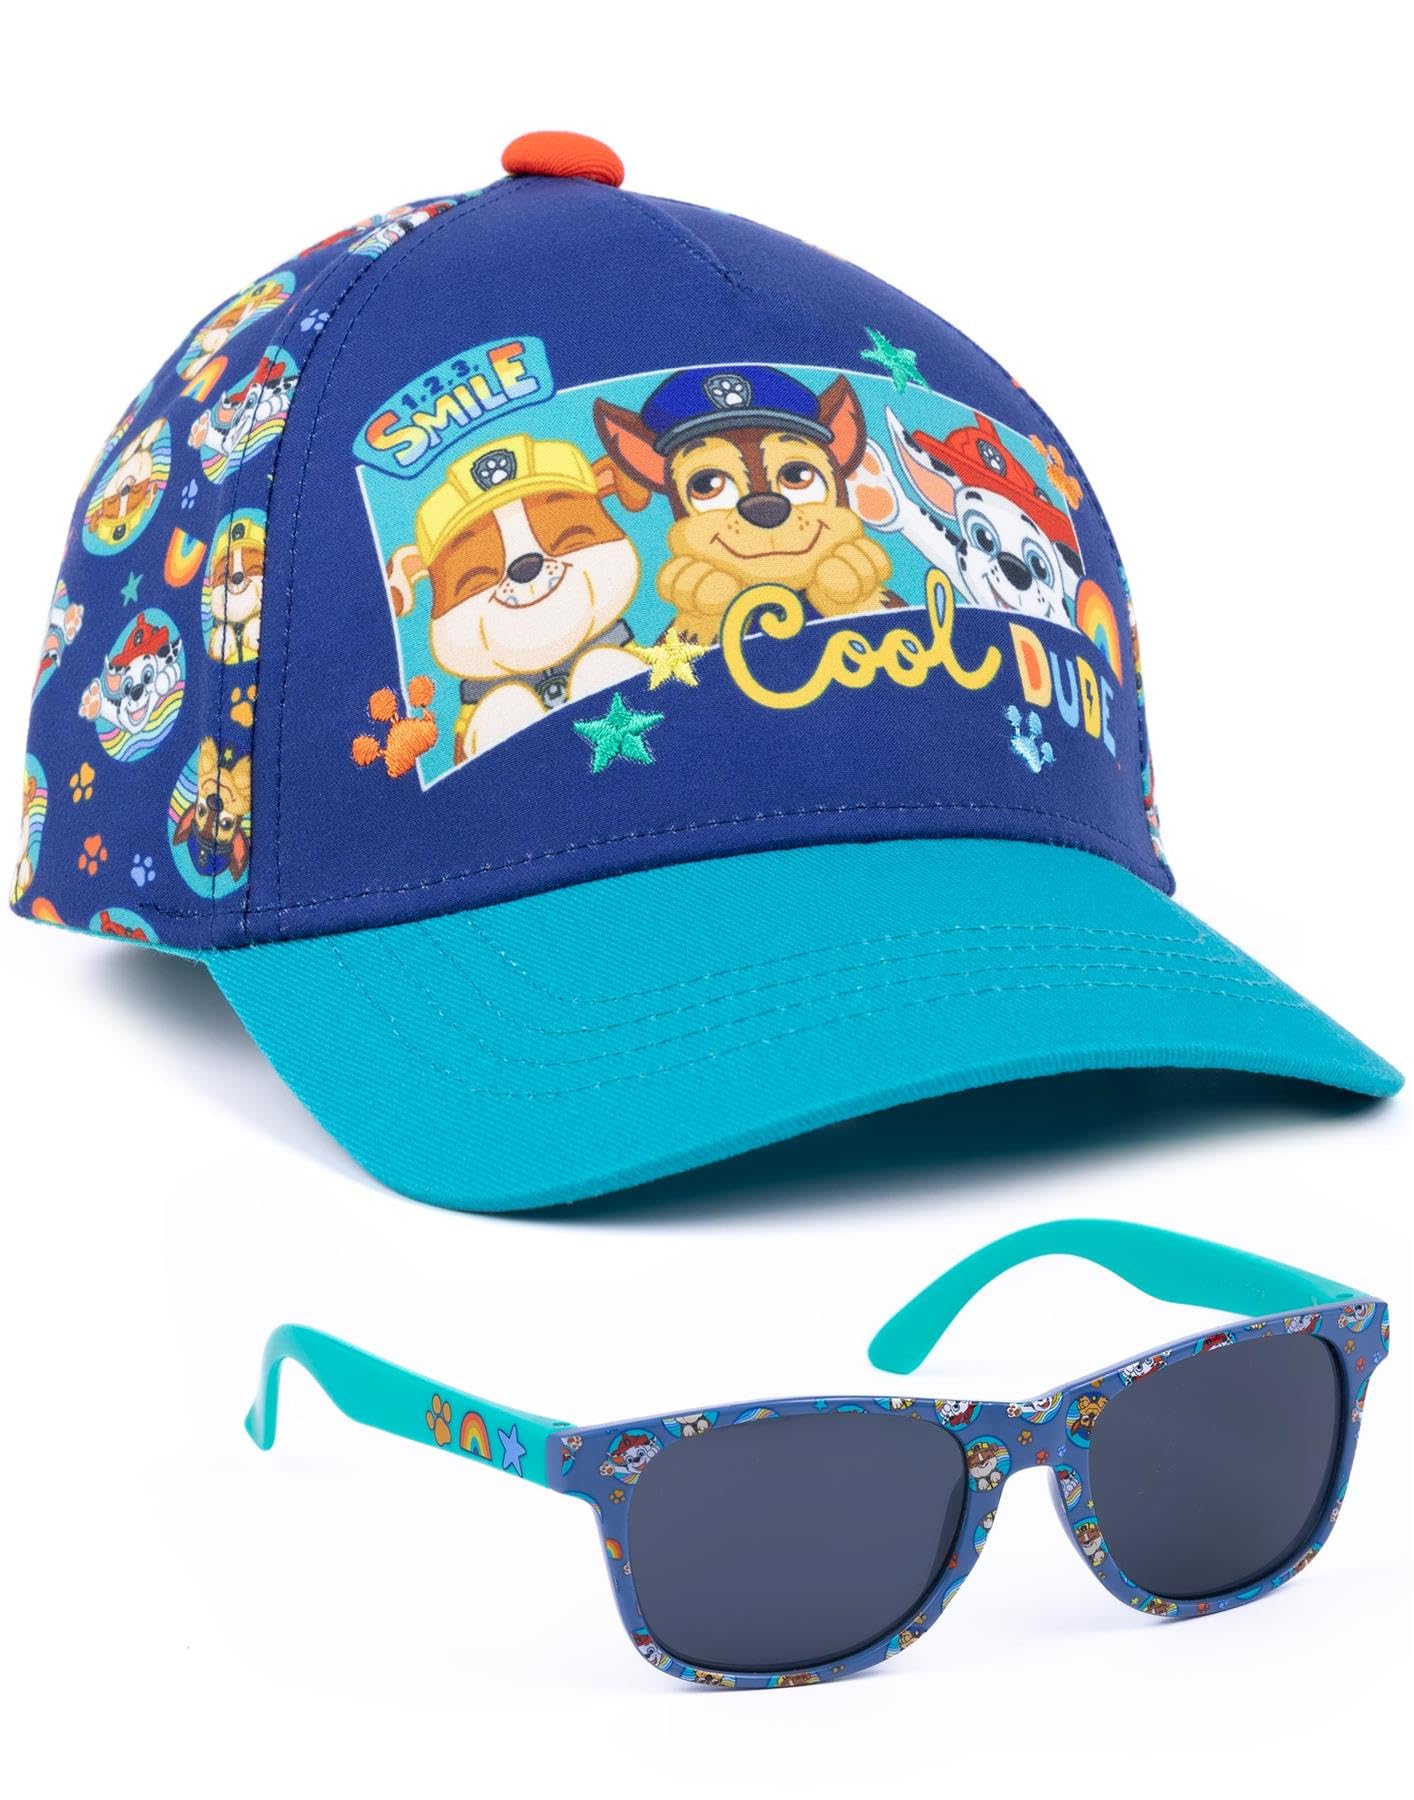 Paw Patrol Boys Snapback Cap & Sunglasses | Rubble Chase Marshall Cool Dude Blue Summer Hat & Shades | Adjustable Headwear